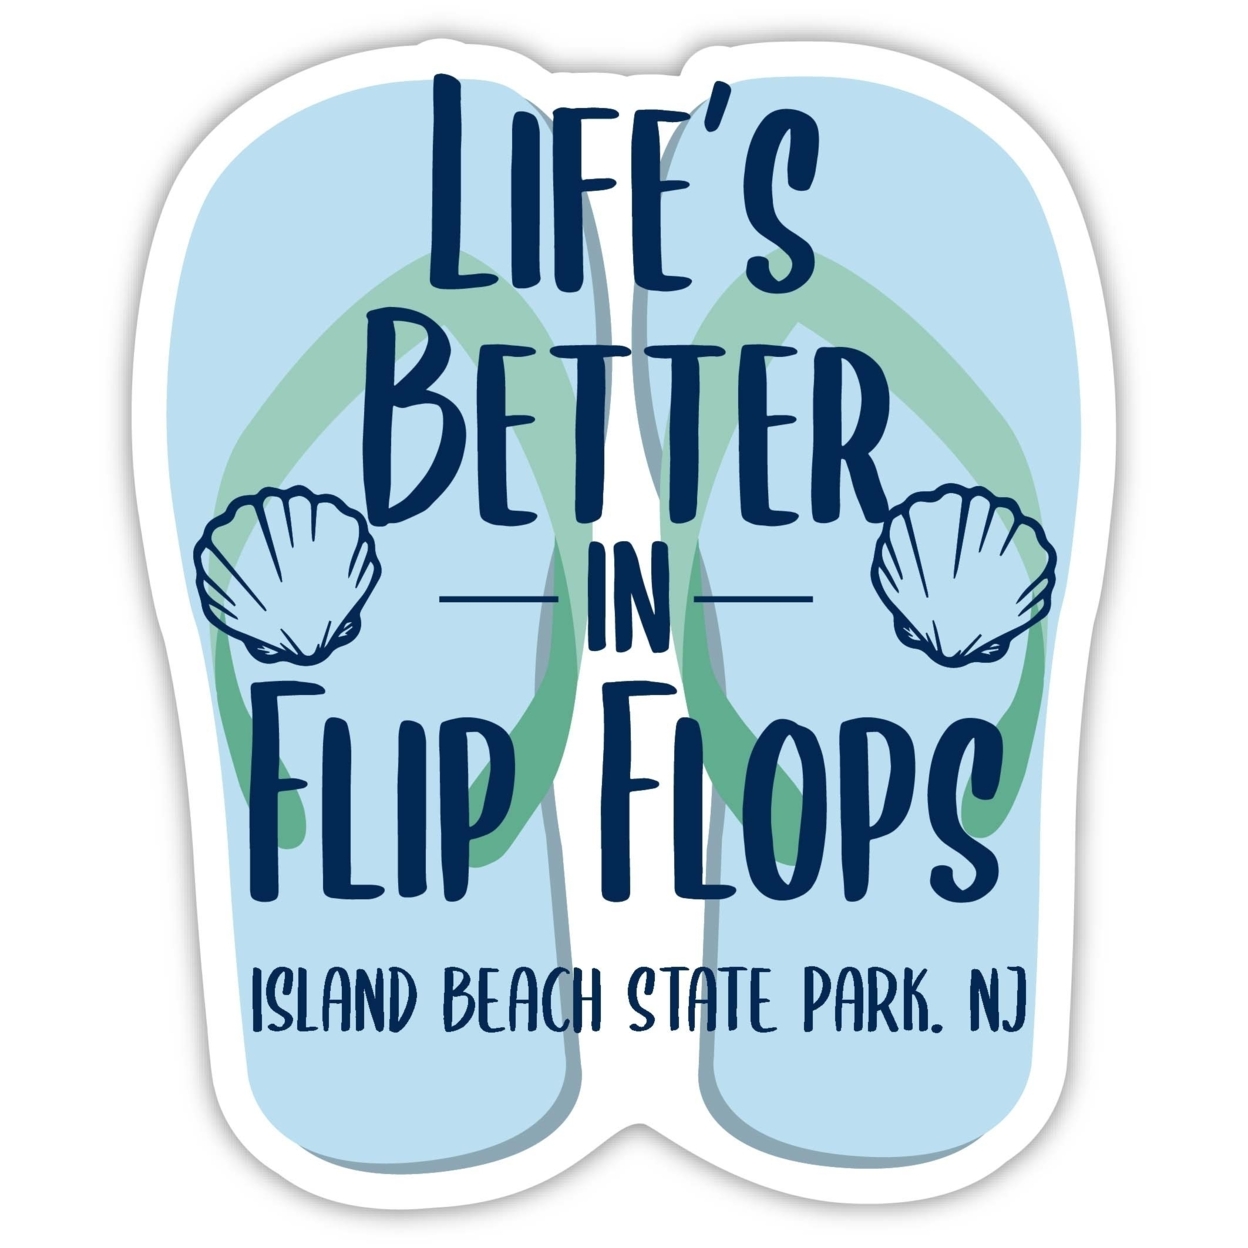 Island Beach State Park New Jersey Souvenir 4 Inch Vinyl Decal Sticker Flip Flop Design